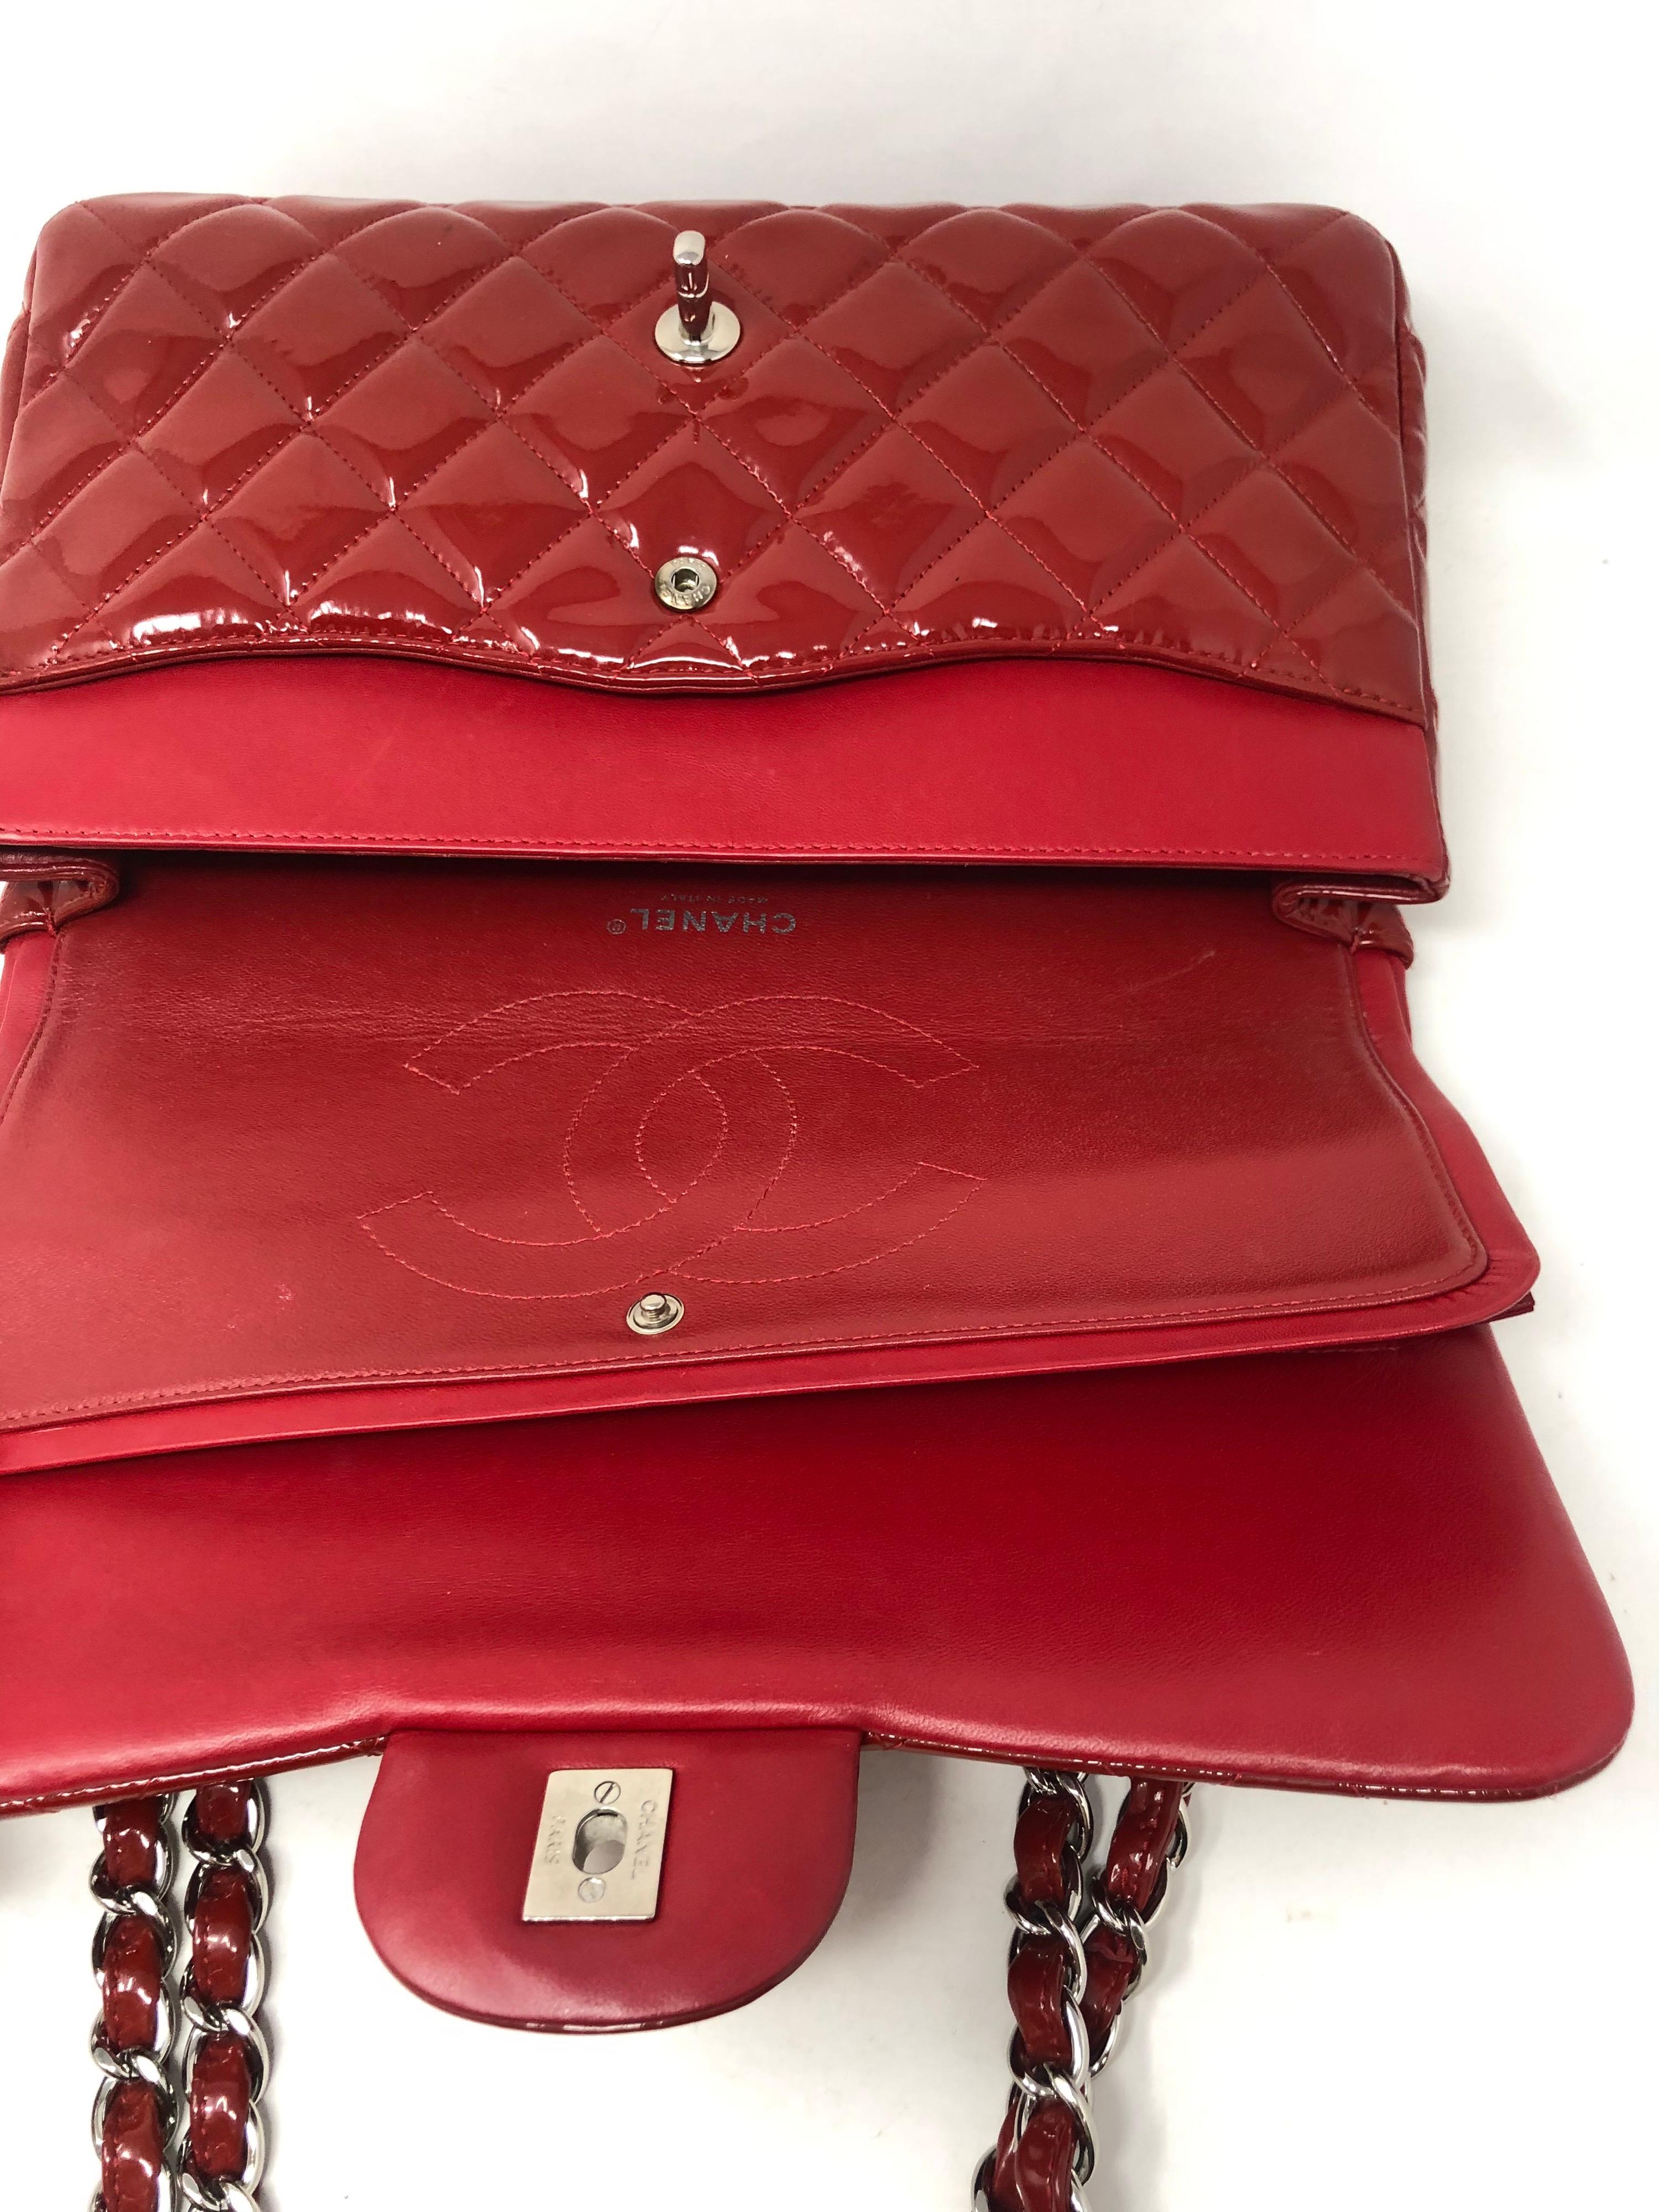 Chanel Red Patent Jumbo Bag  5